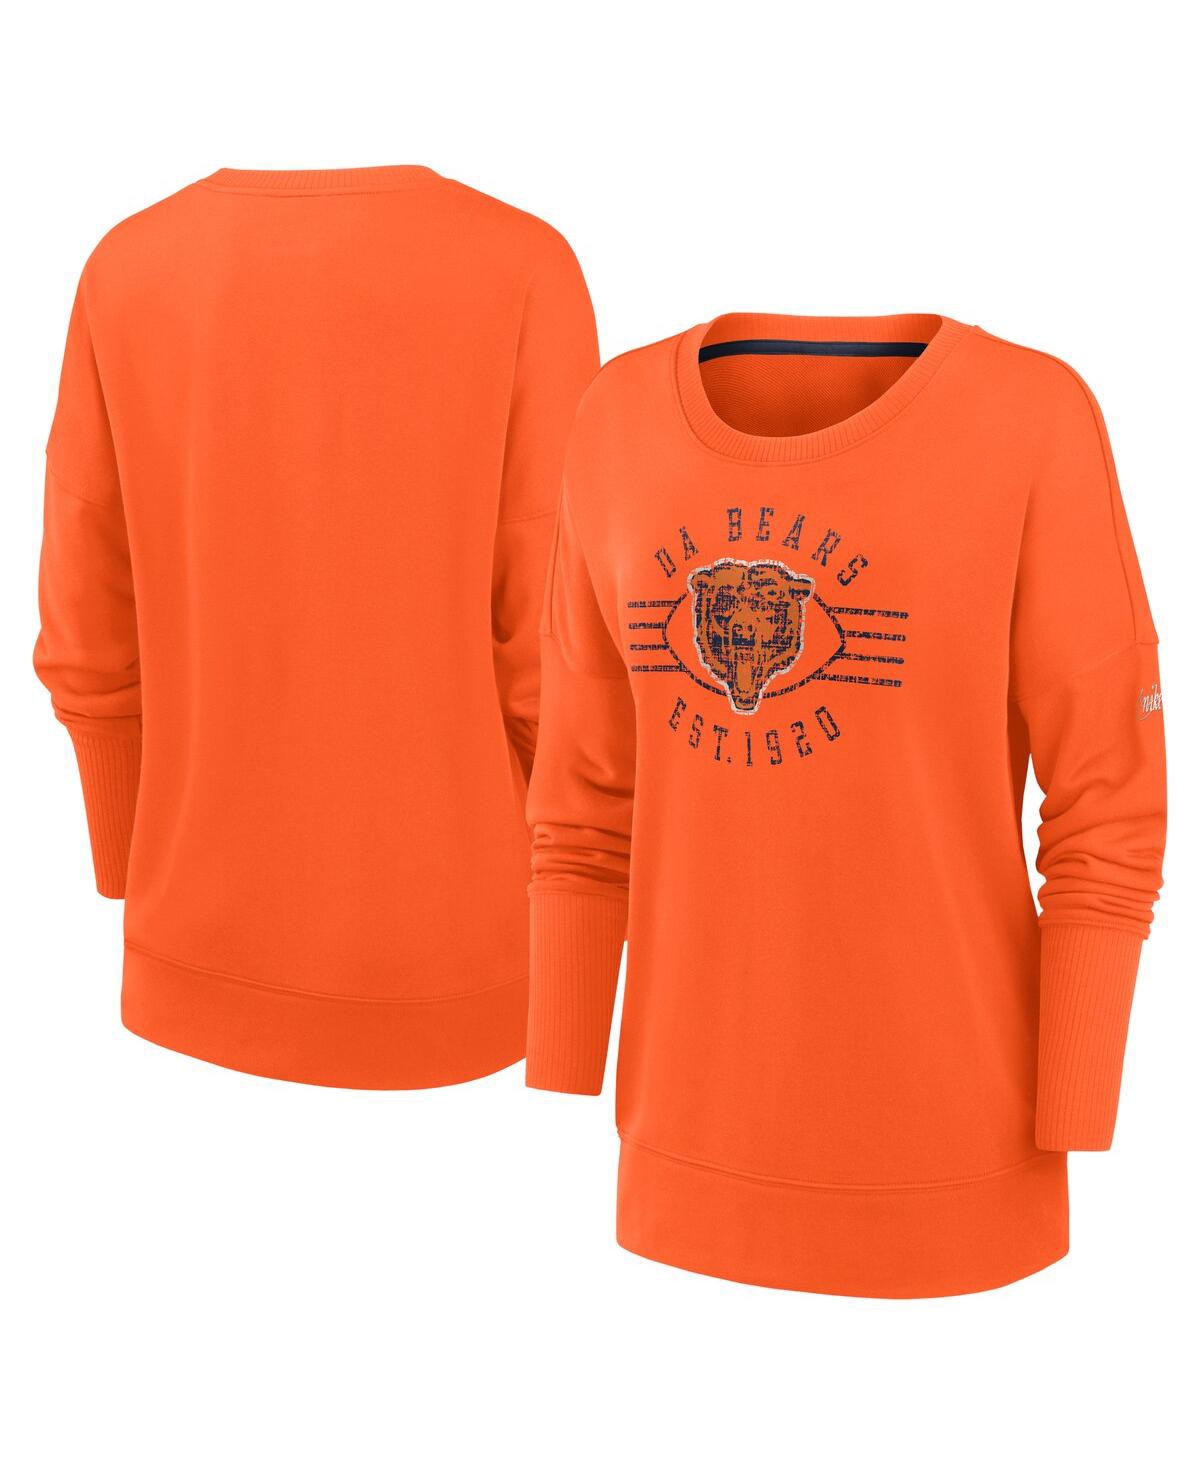 Women's Nike Orange Chicago Bears Rewind Playback Icon Performance Pullover Sweatshirt - Orange